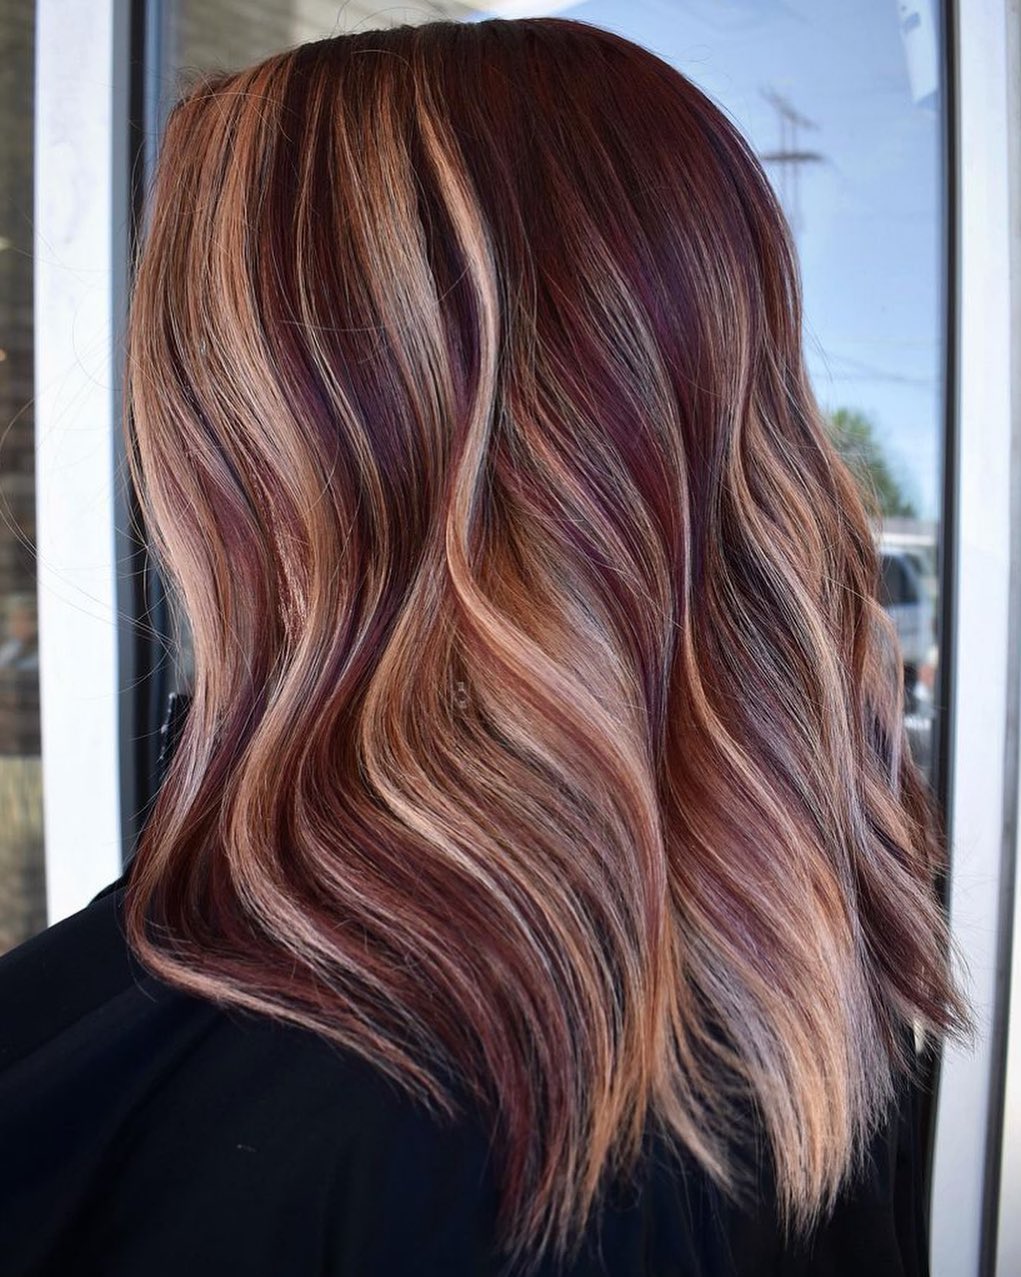 Medium-length Blonde Hair with Red Highlights